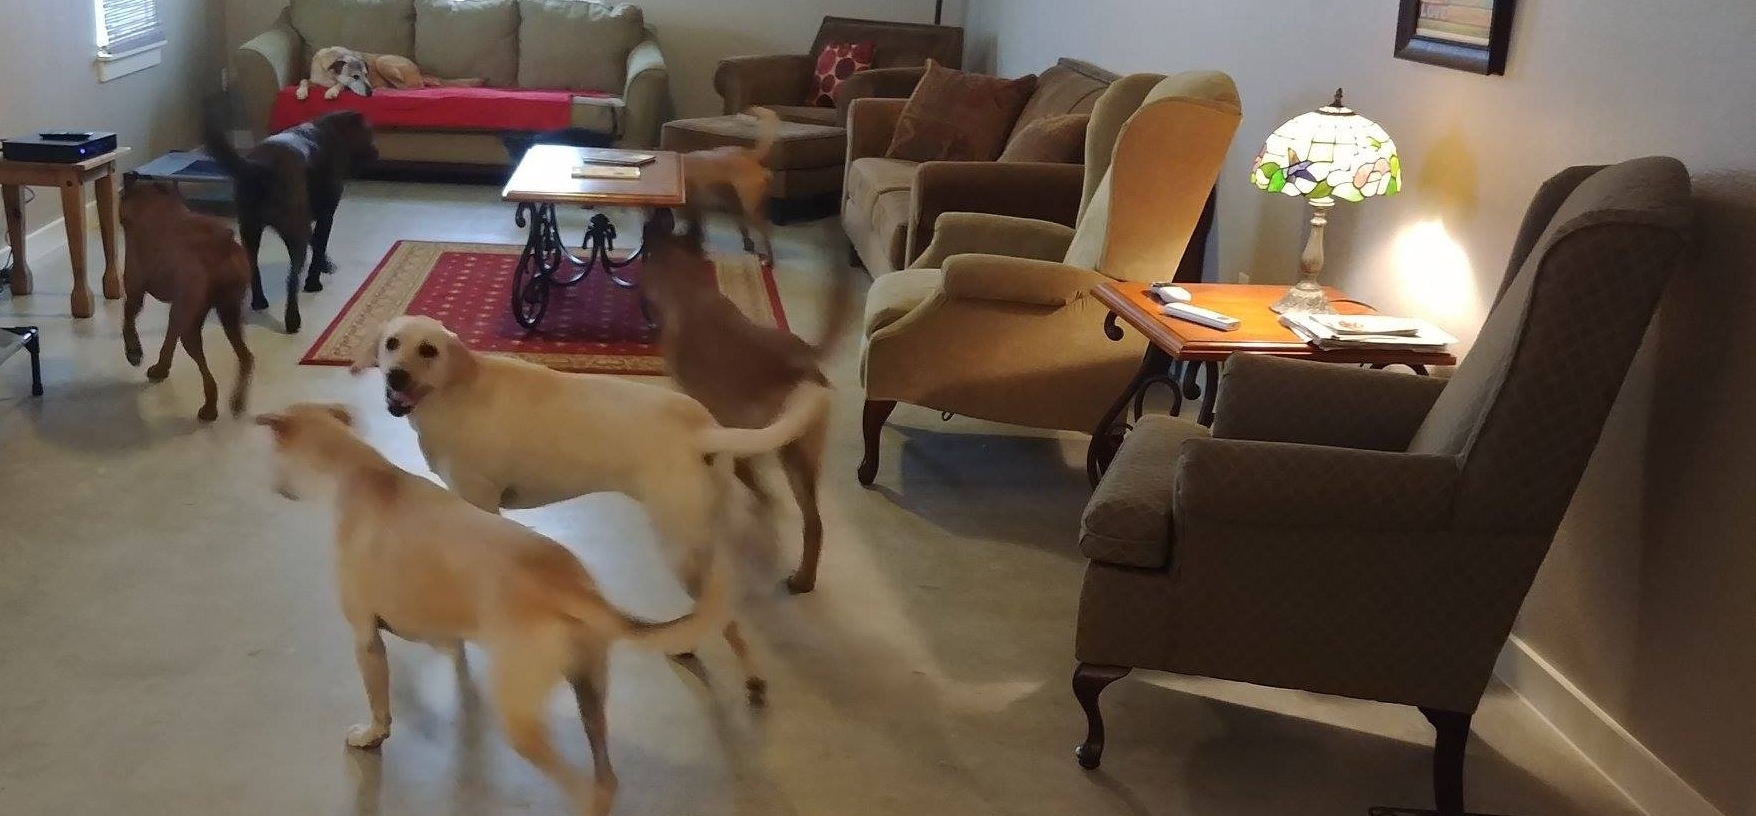 Dogs in lounge area 2.jpg